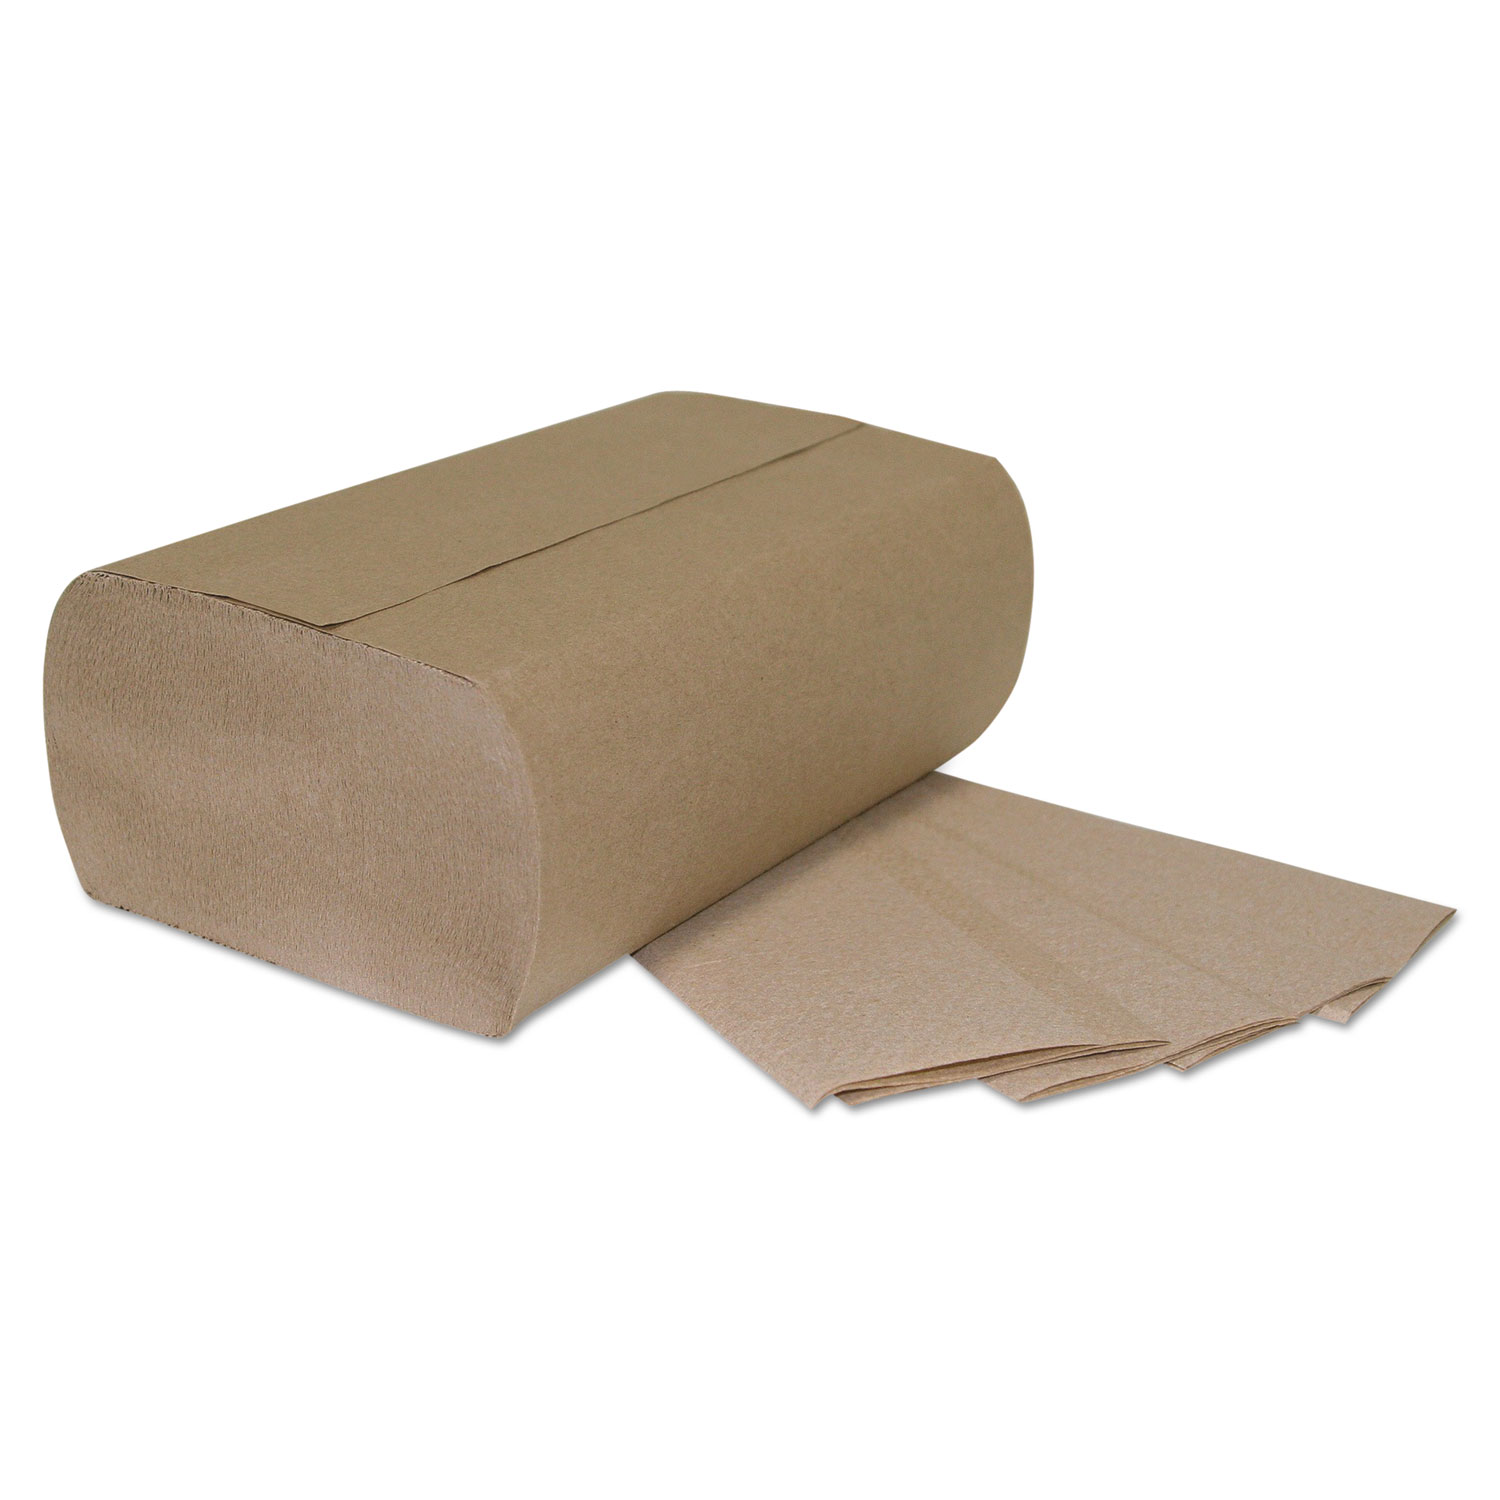  GEN GEN1941 Multi-Fold Paper Towels, 1-Ply, Brown, 9 1/4 x 9 1/4, 250 Towels/Pack, 16 Packs/Carton (GEN1941) 